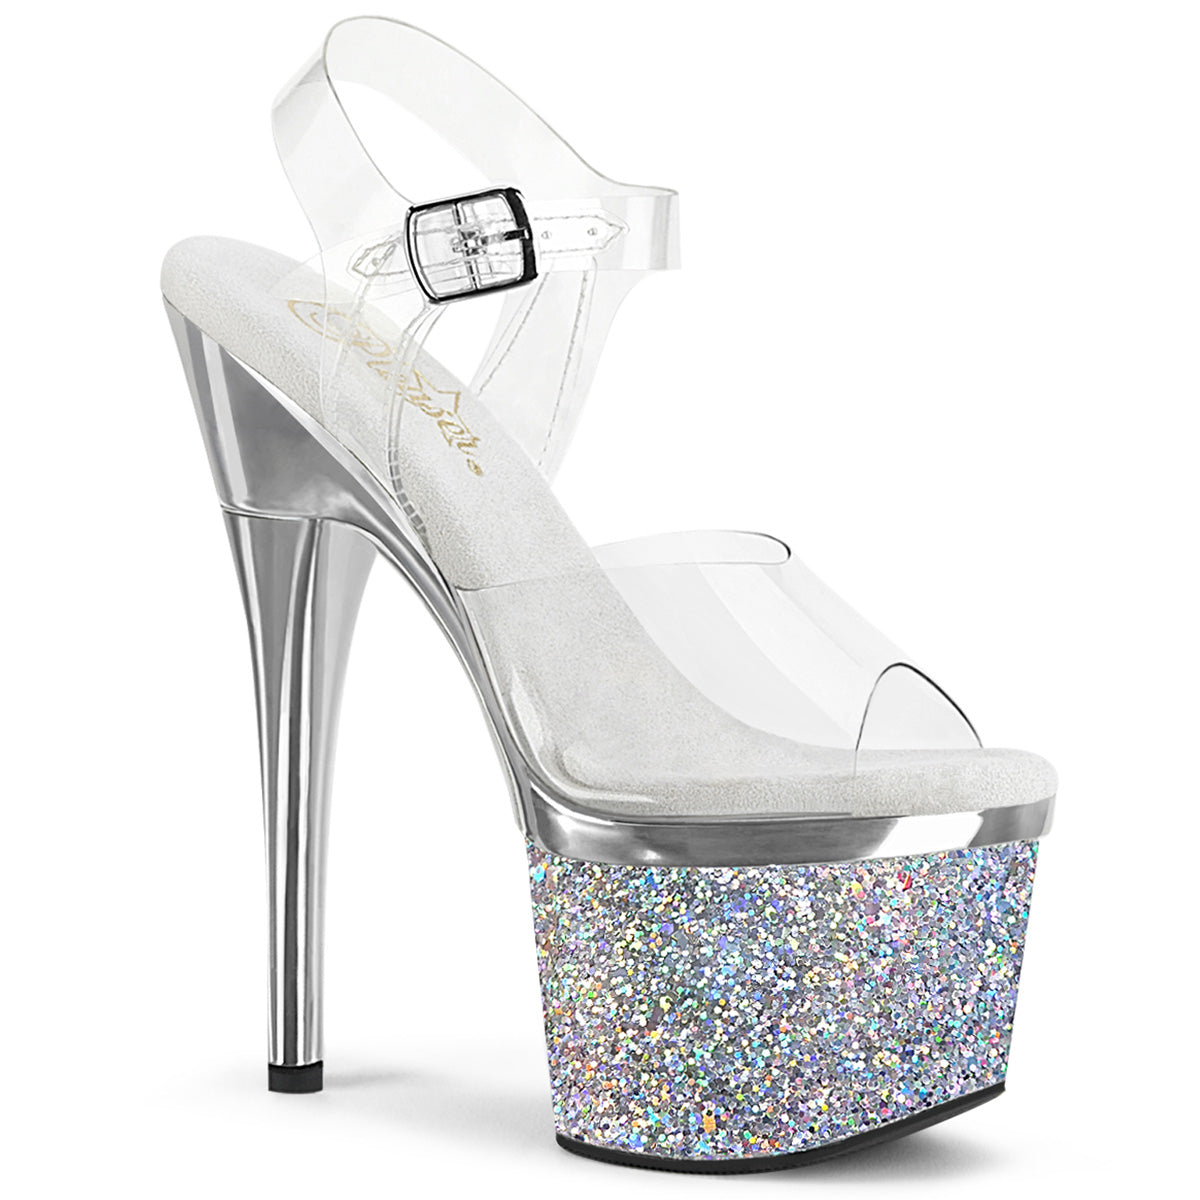 Esteem-708Chlg 7 "Heel Clear Silver Glitter Strippers Pantofi